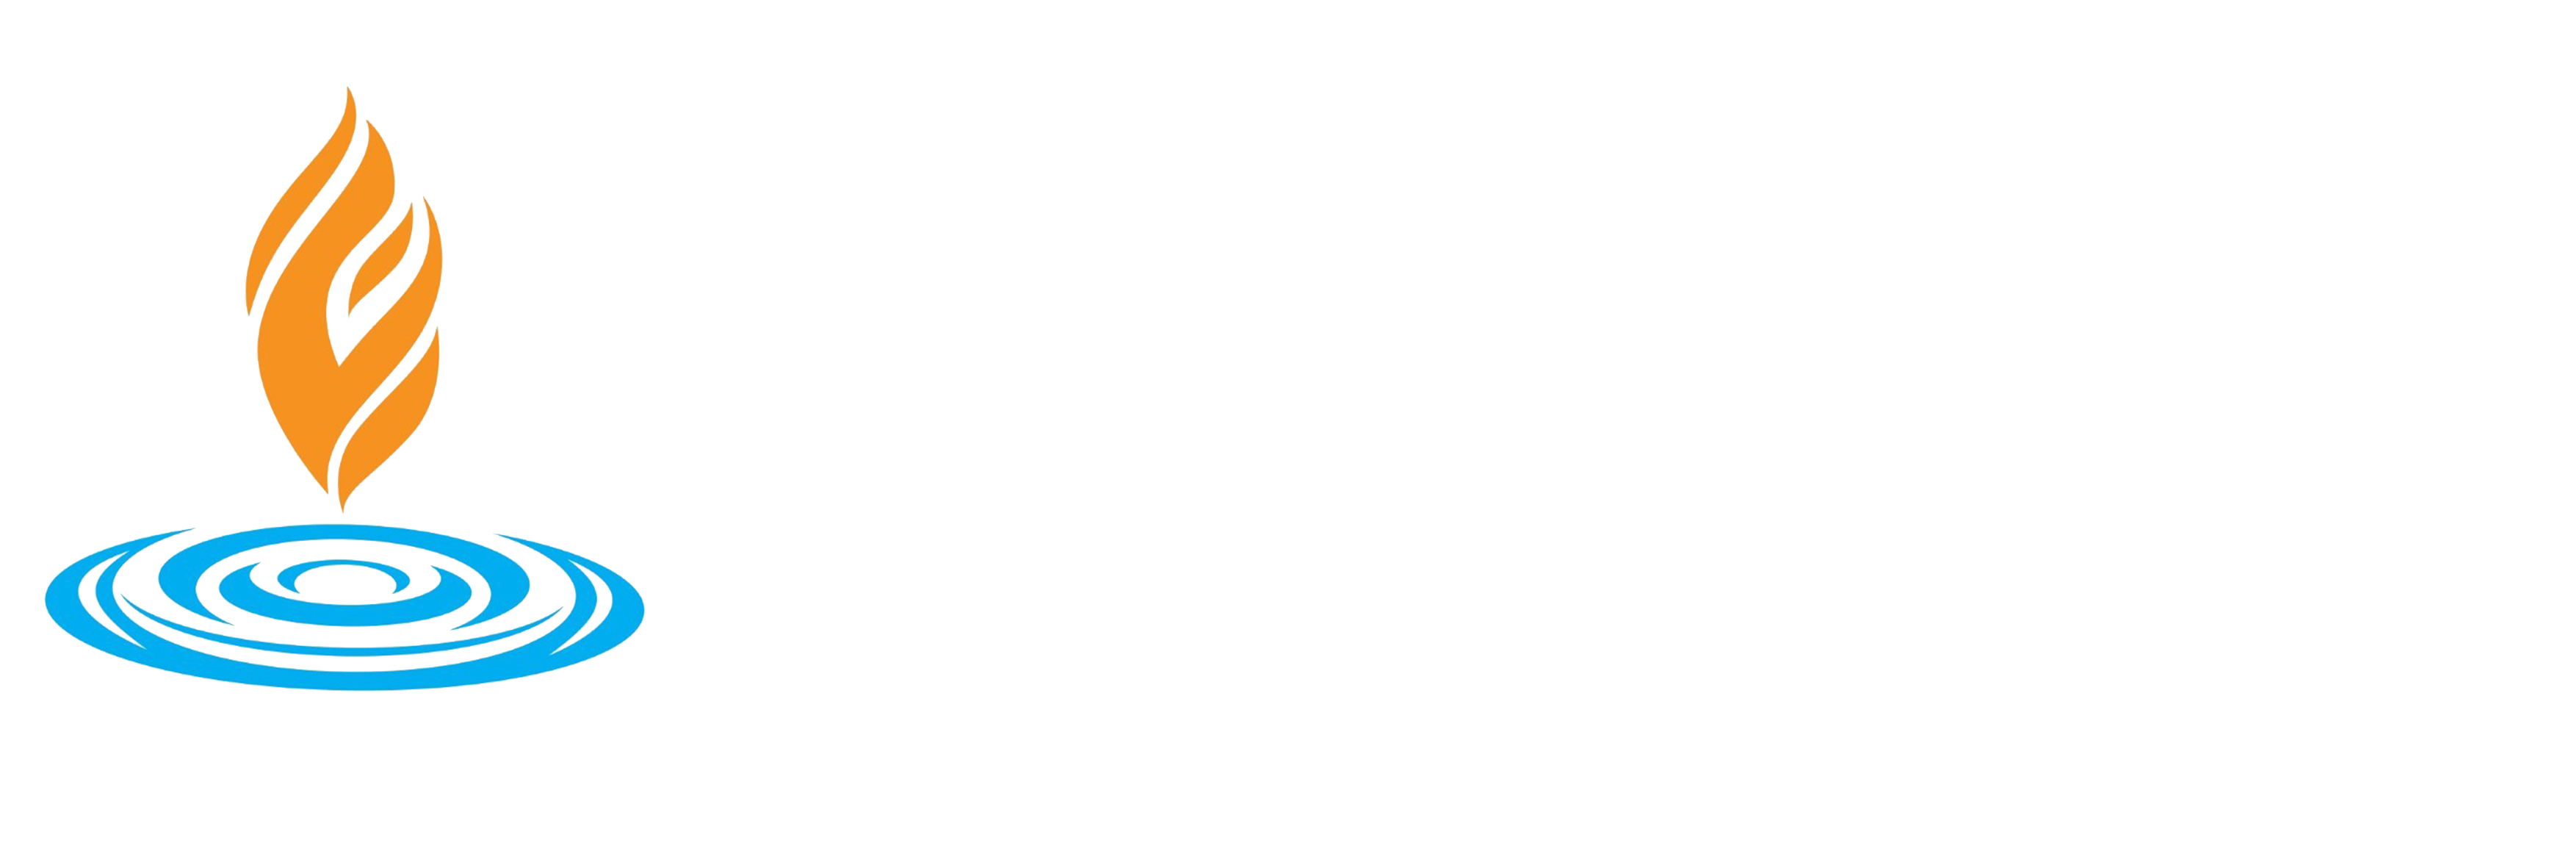 River of Life Worship Center